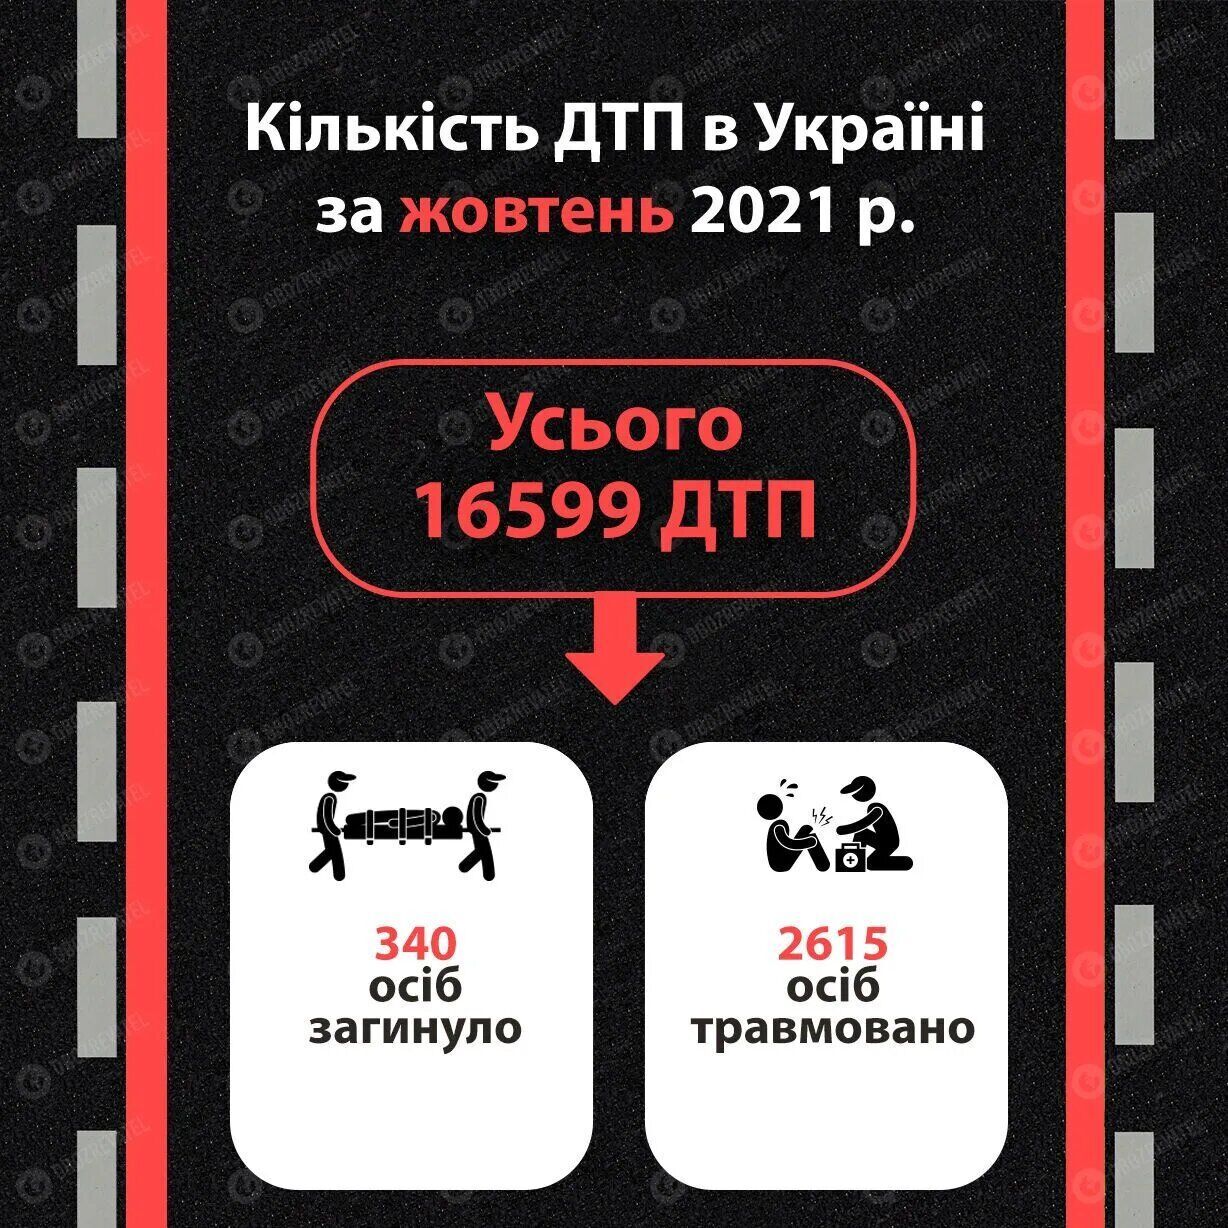 Статистика ДТП в Украине за октябрь 2021 года